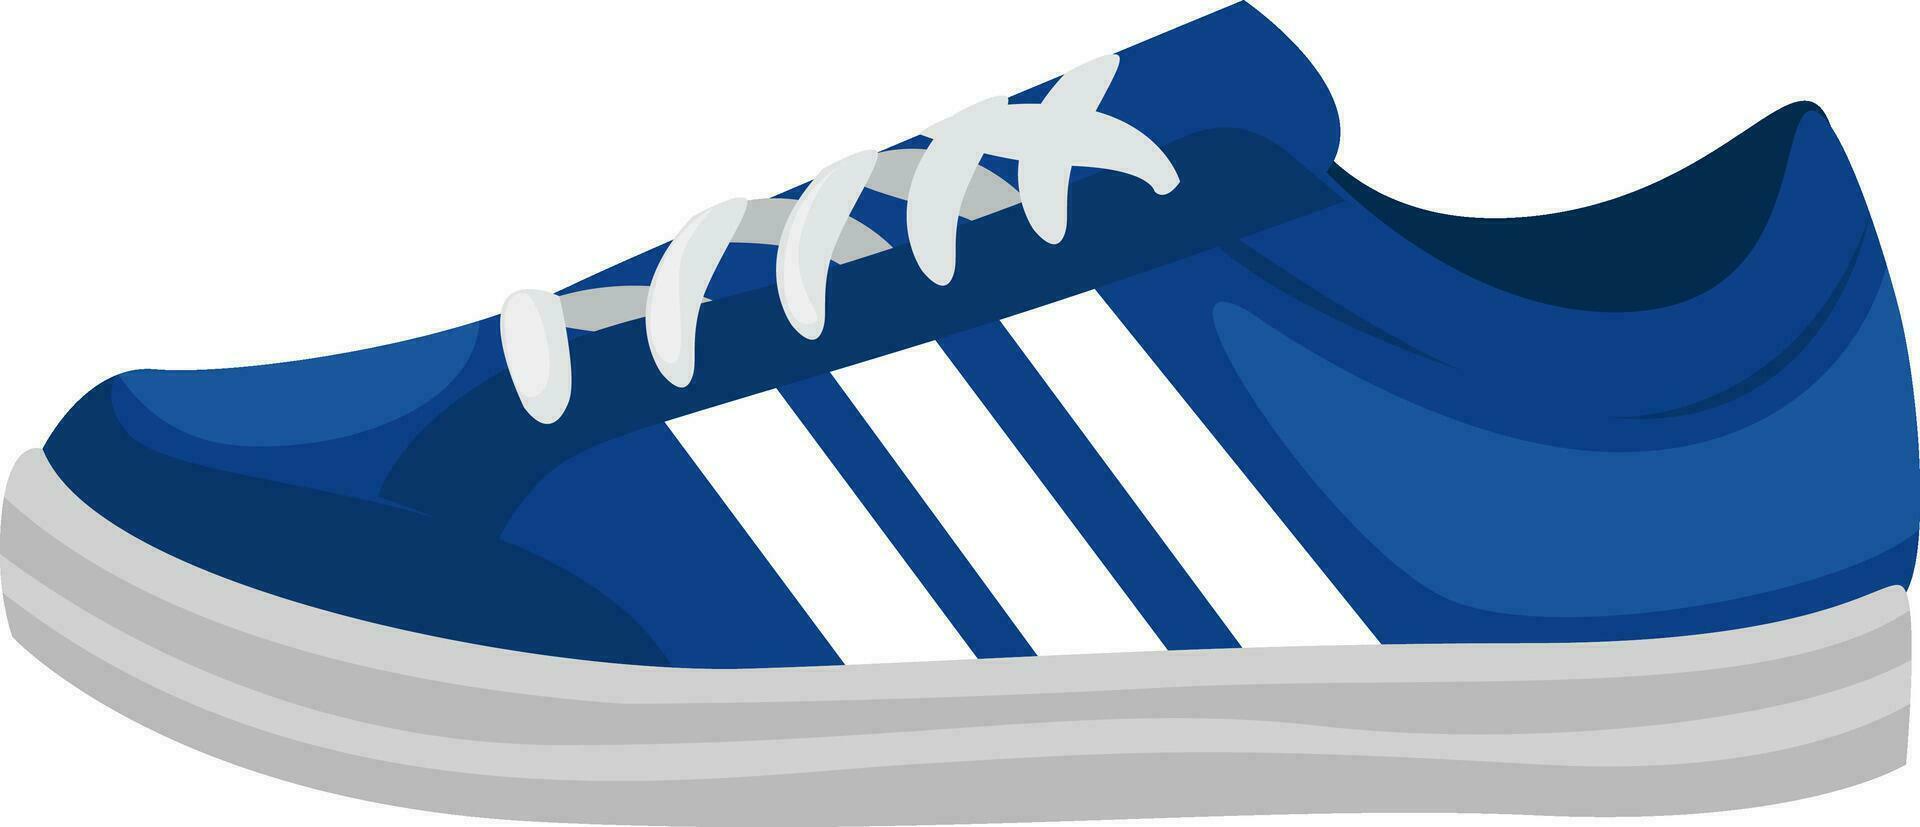 azul zapatillas, ilustración, vector en blanco antecedentes